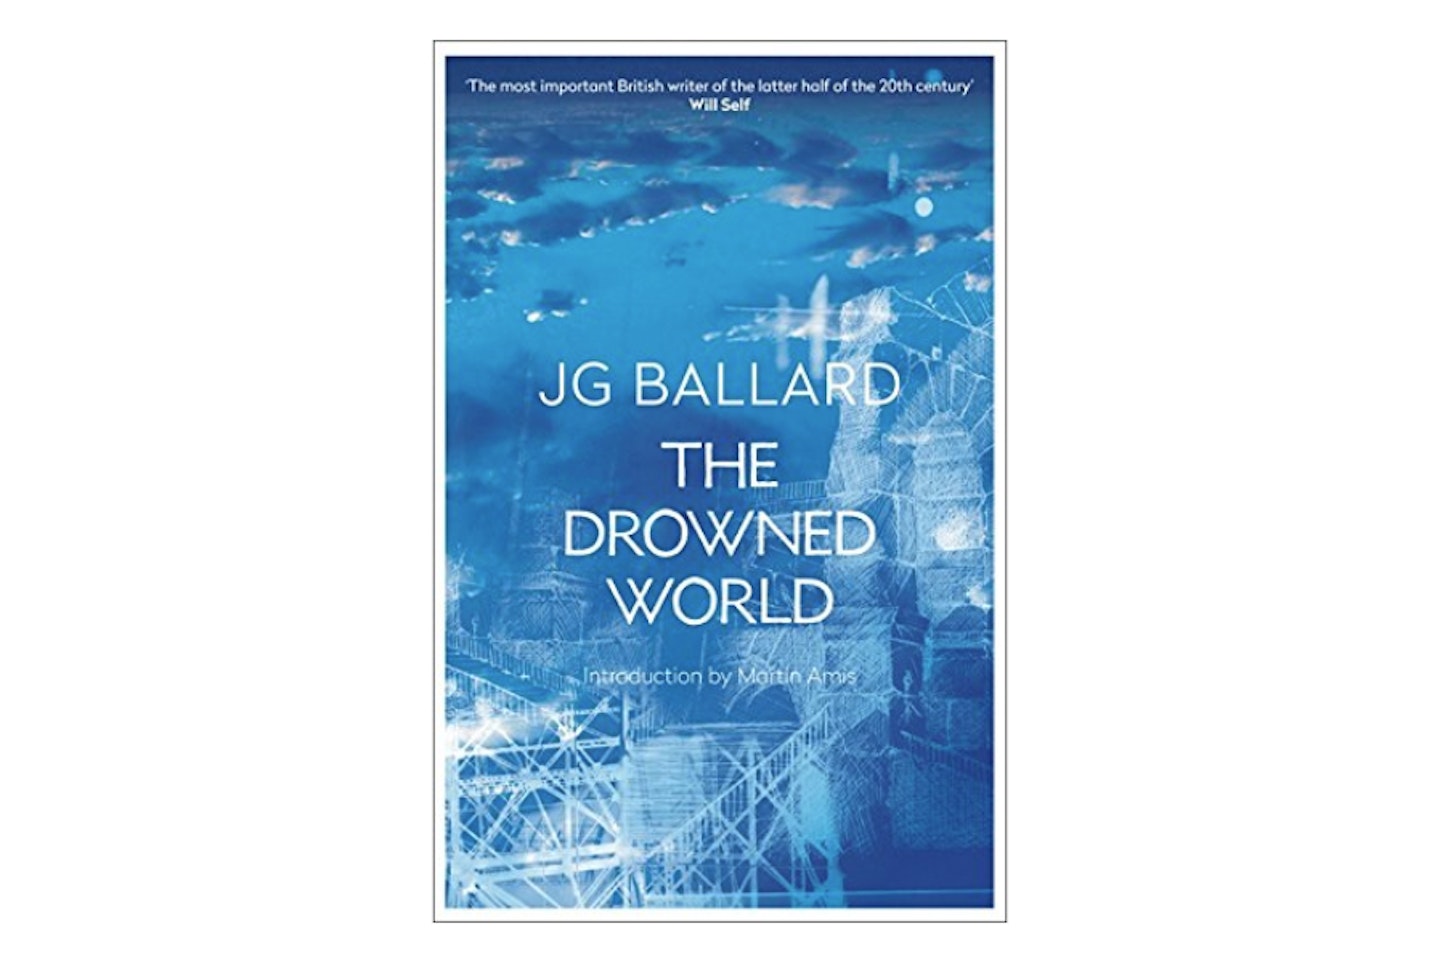 The Drowned World by J. G. Ballard, 1962